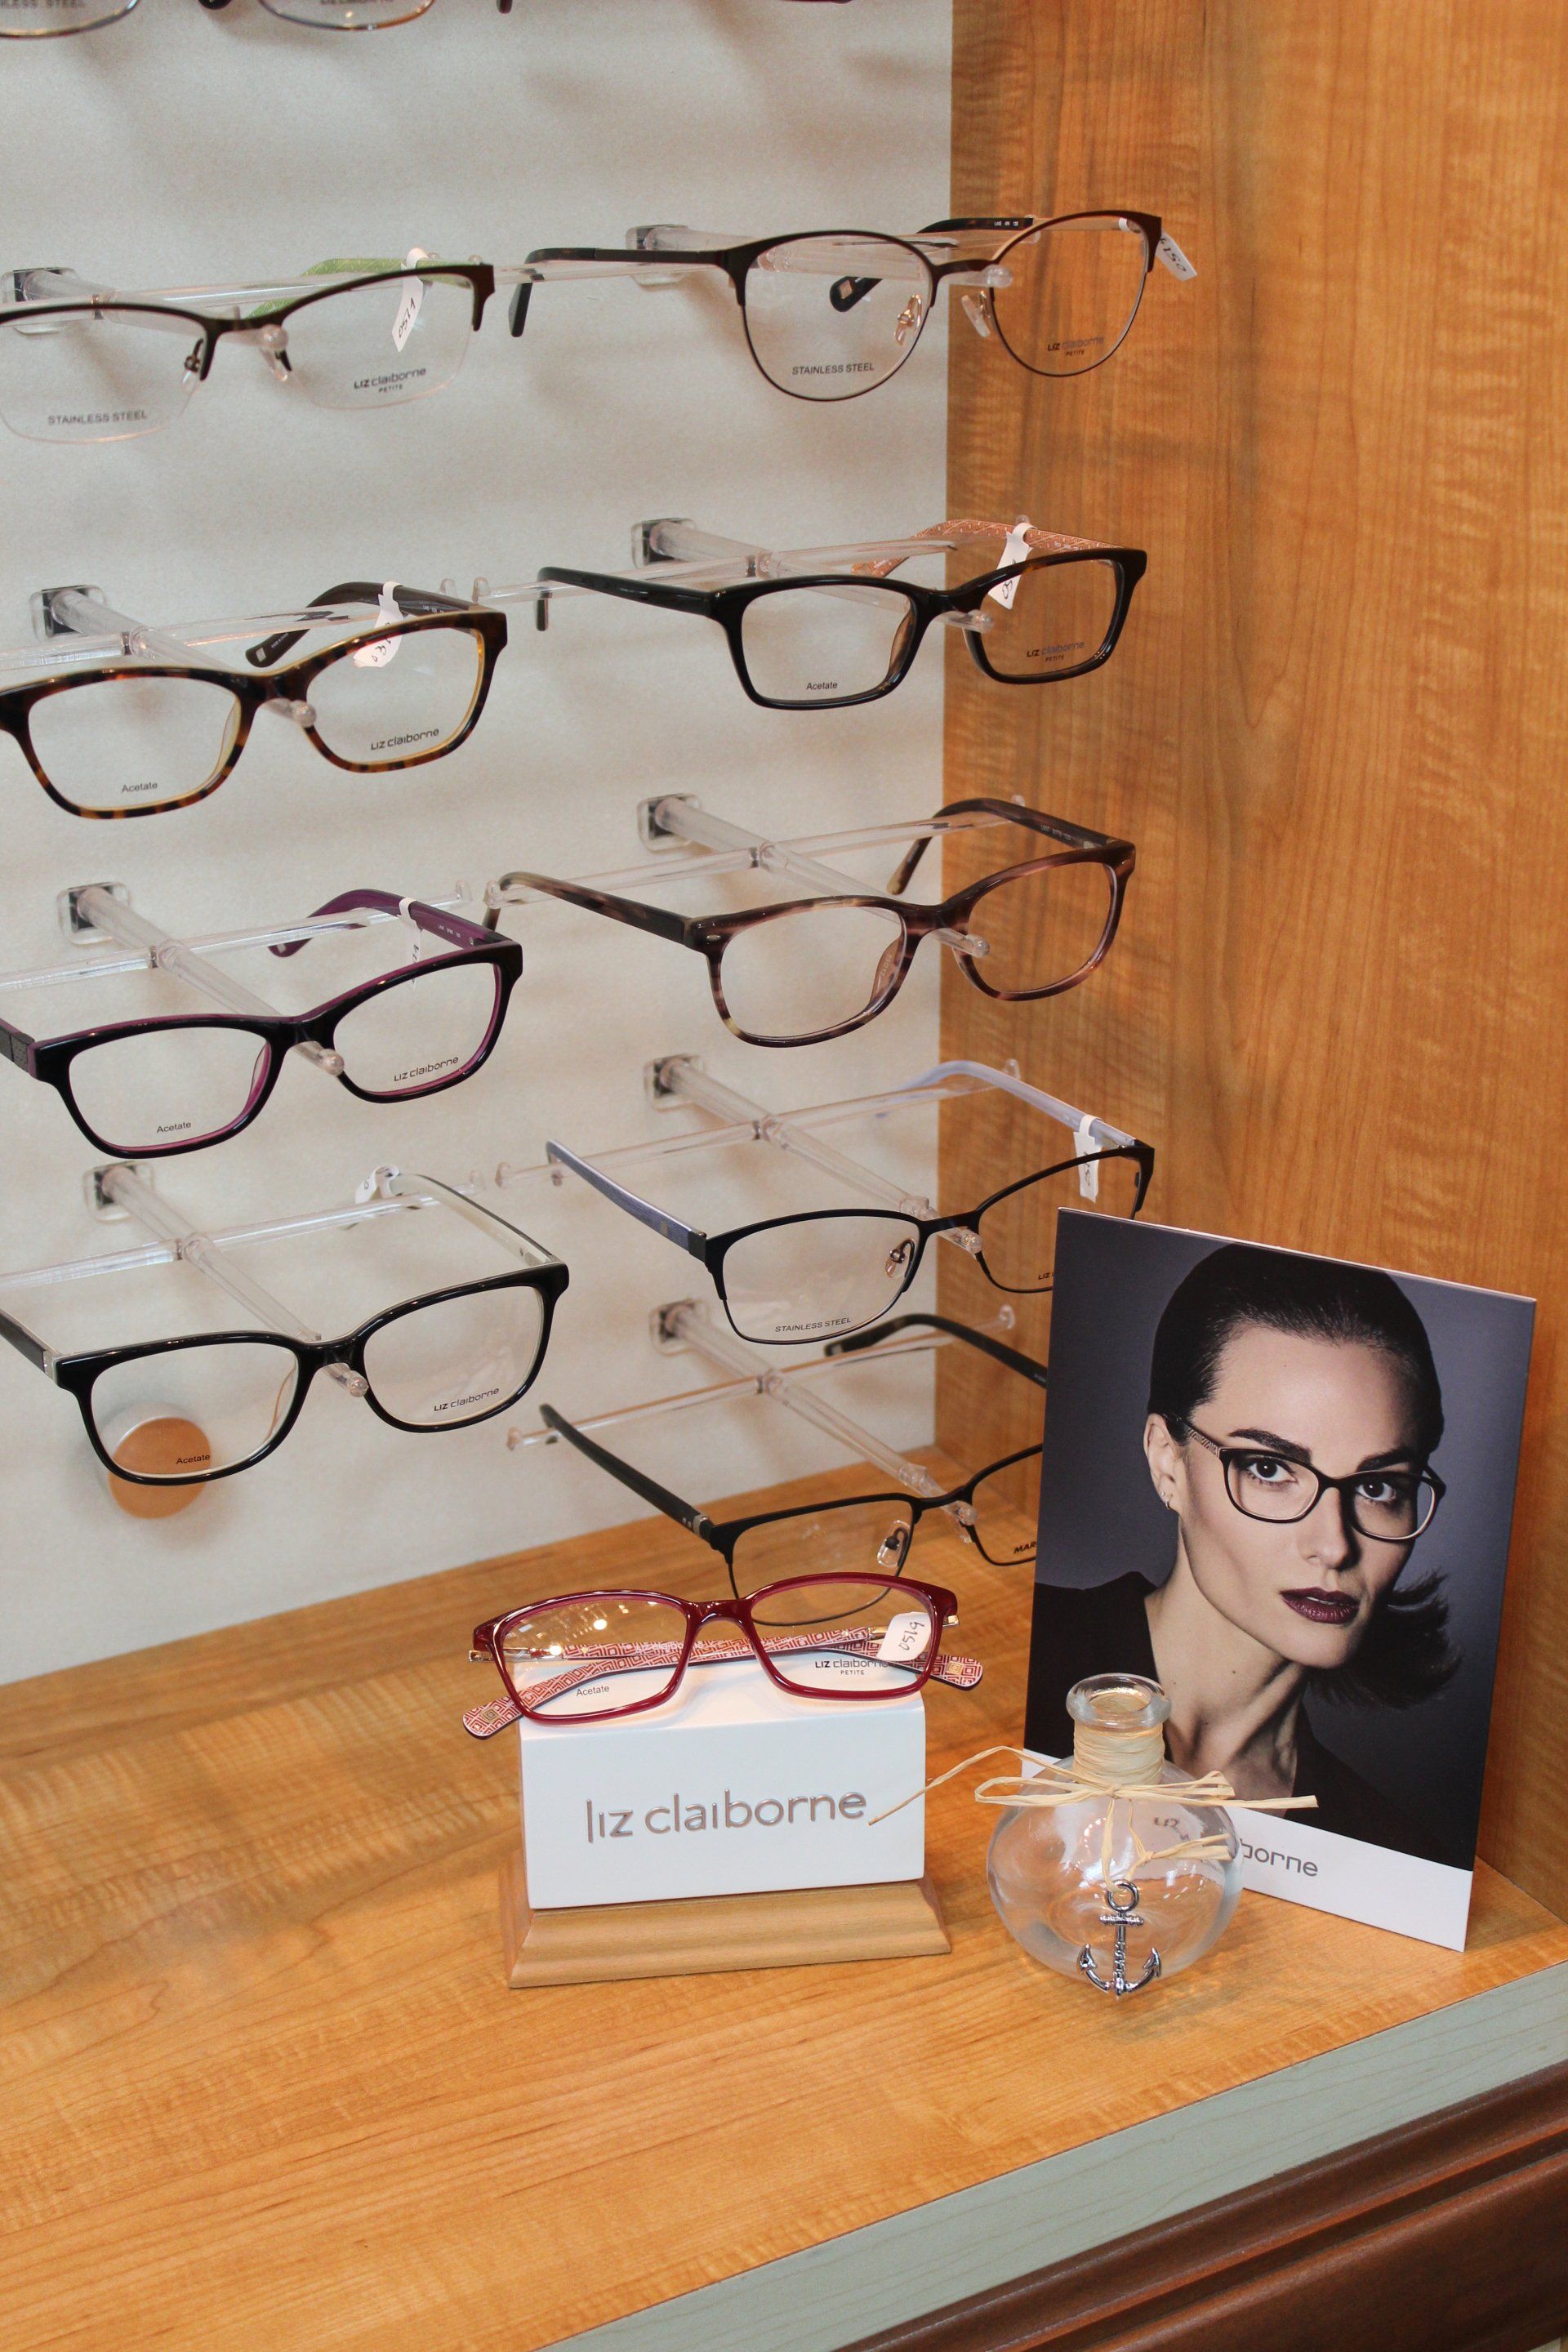 Liz Claiborne - Quality Eyewear in West Chester, PA